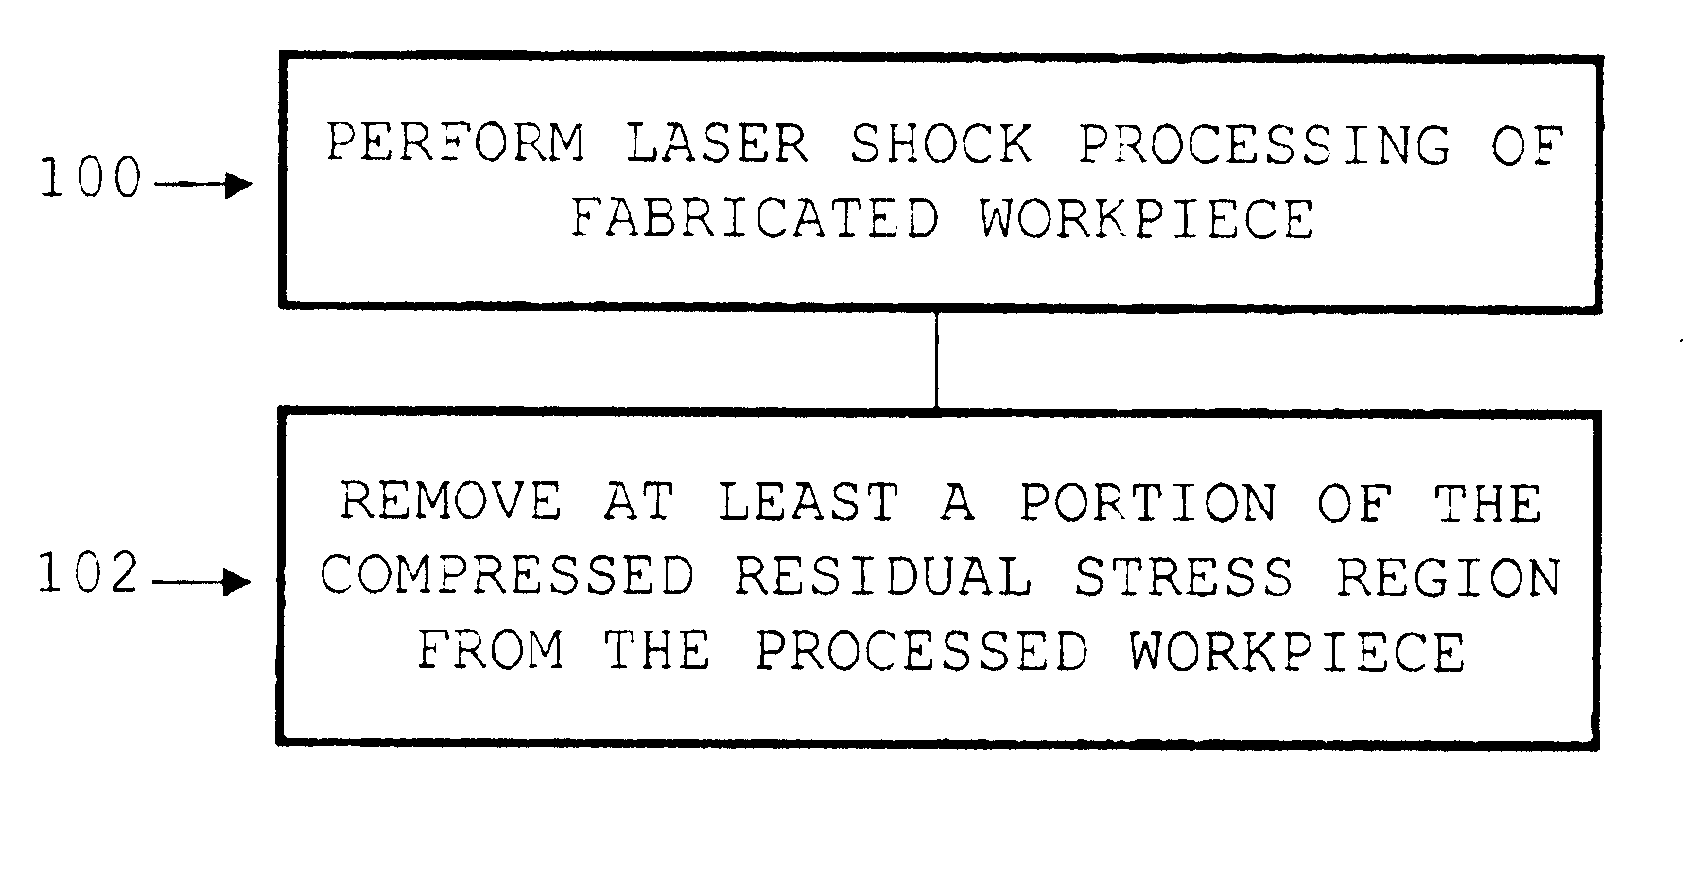 Method of modifying a workpiece following laser shock processing